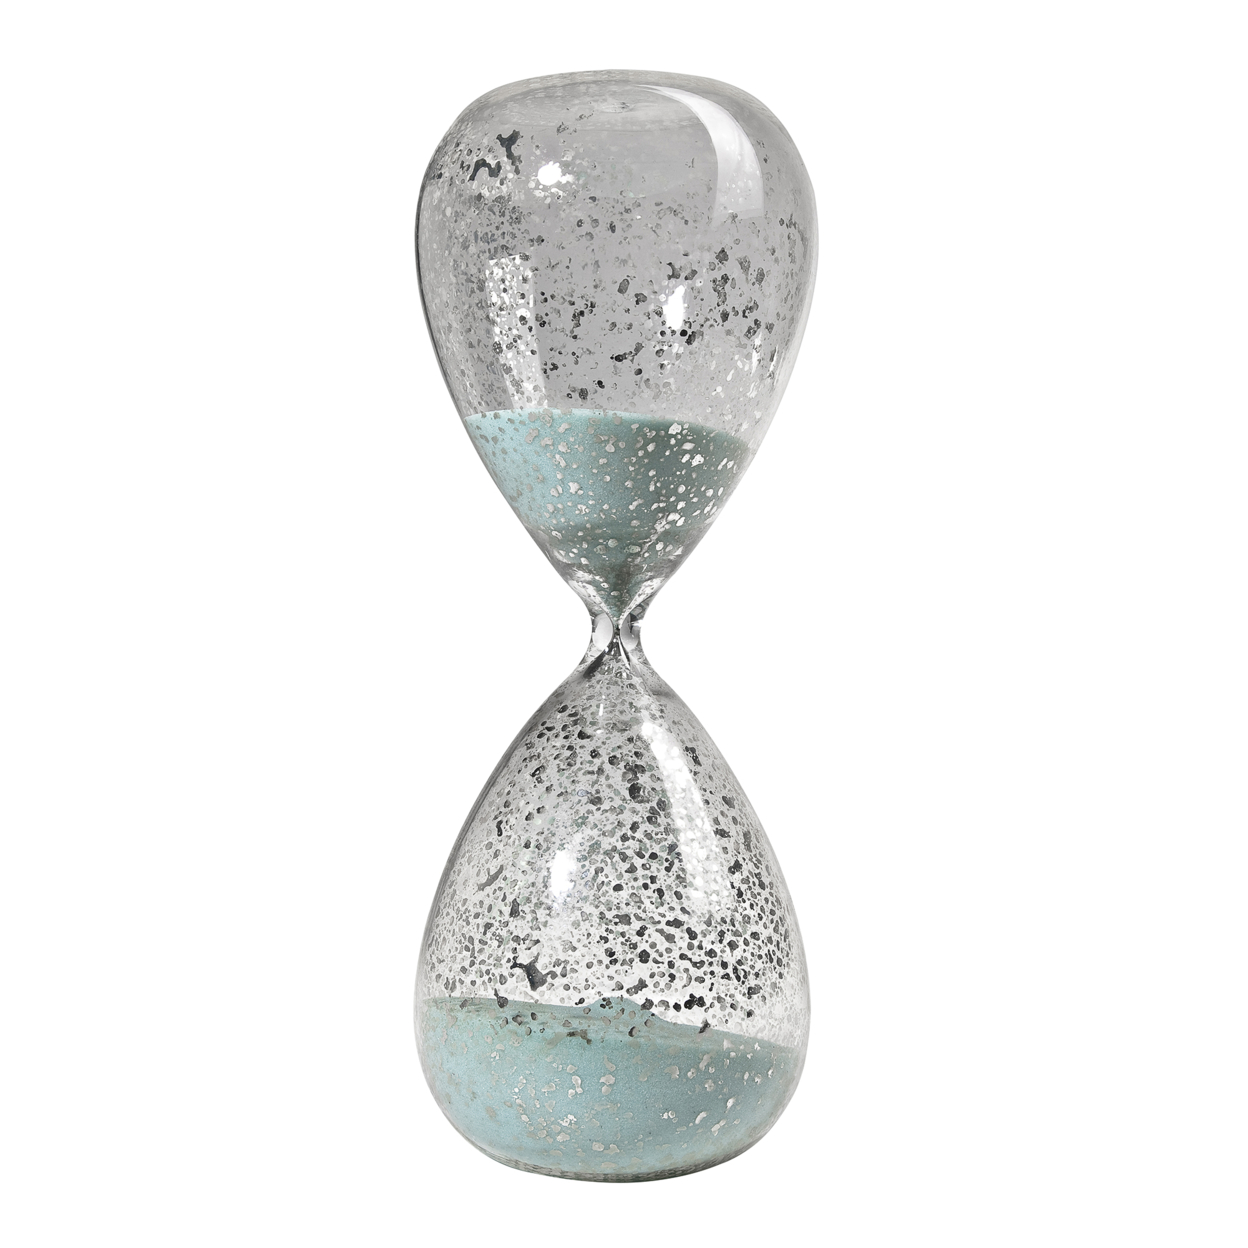 Doug 10 Inch Decorative 60 Minute Hourglass Accent Decor, Teal Blue Sand- Saltoro Sherpi